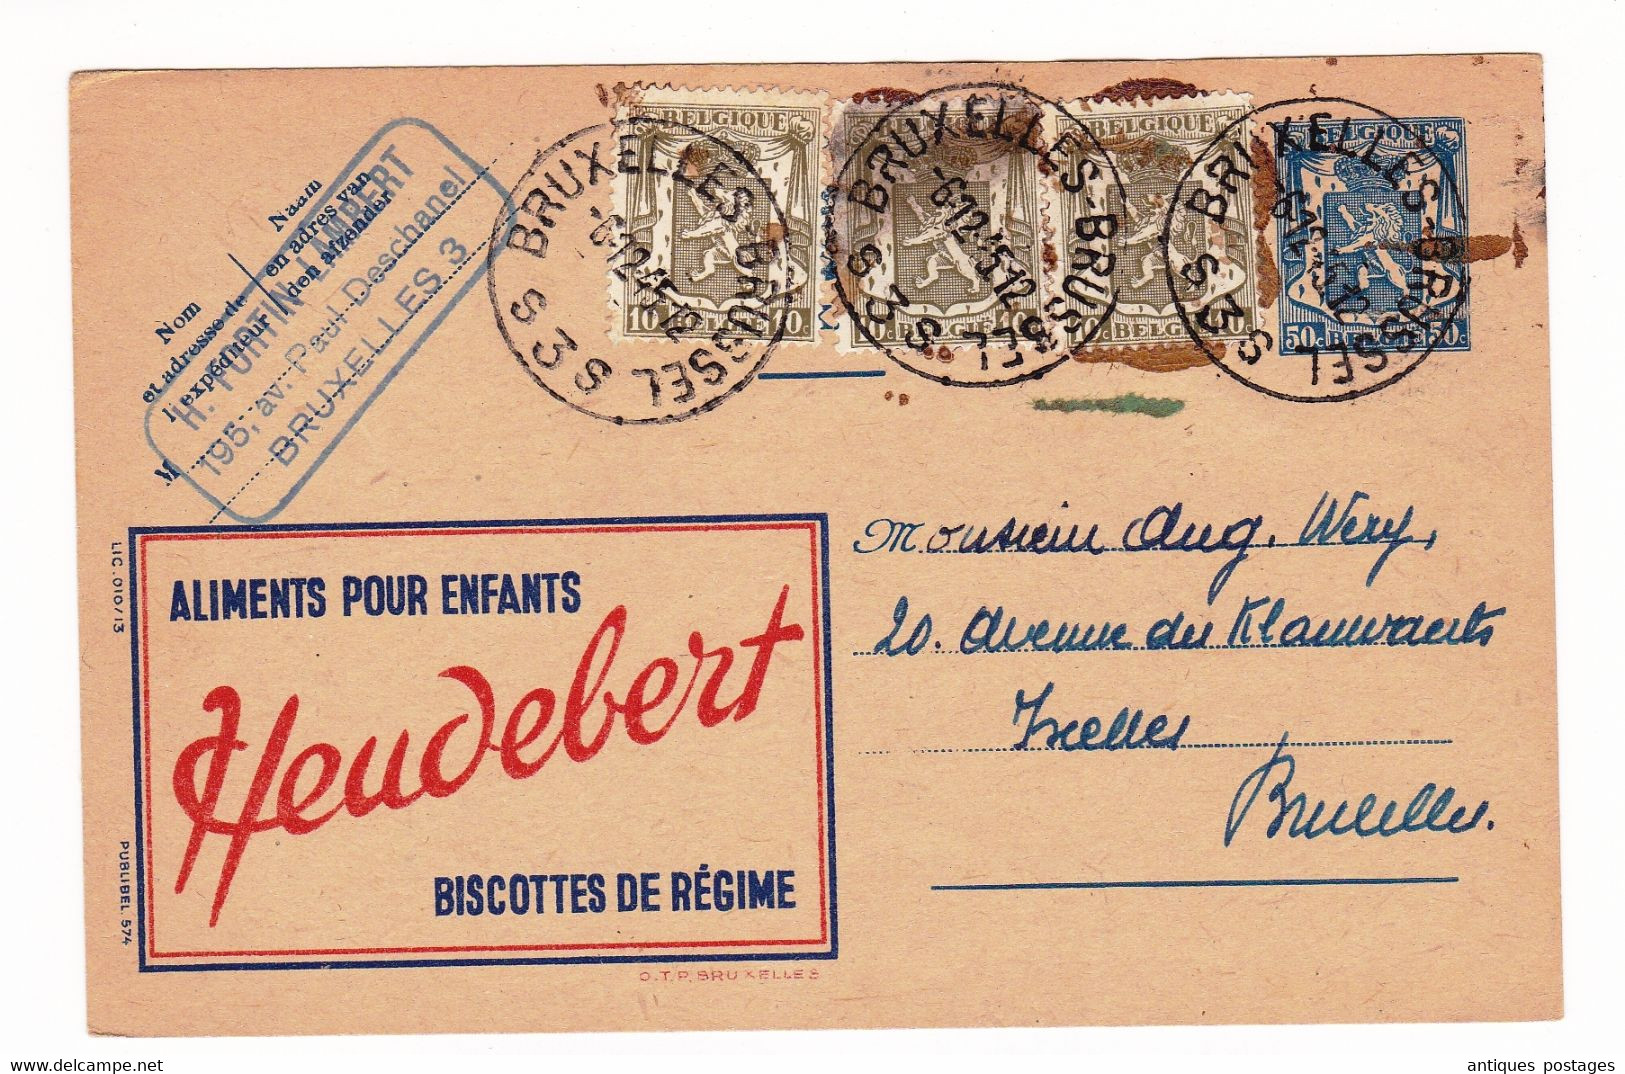 Carte Postale Publicitaire Biscottes Heudebert 1945 Bruxelles Belgique Fortin Lambert 195 Avenue Paul Deschanel - Cartoline 1934-1951